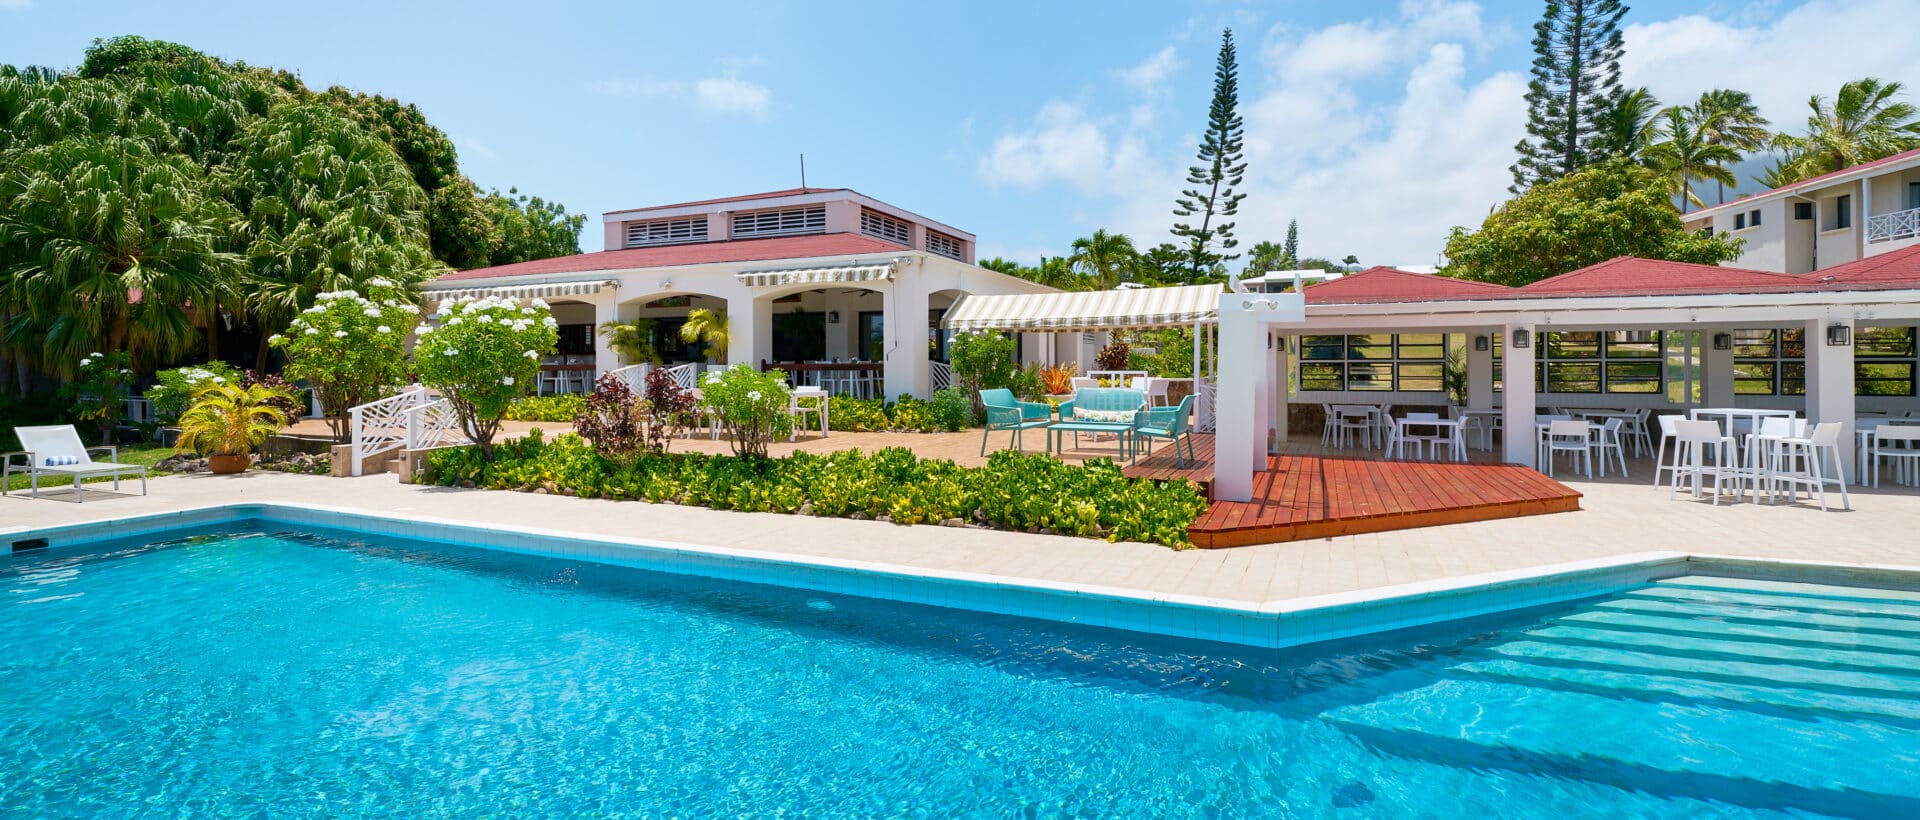 The Mount Nevis Hotel - Pool